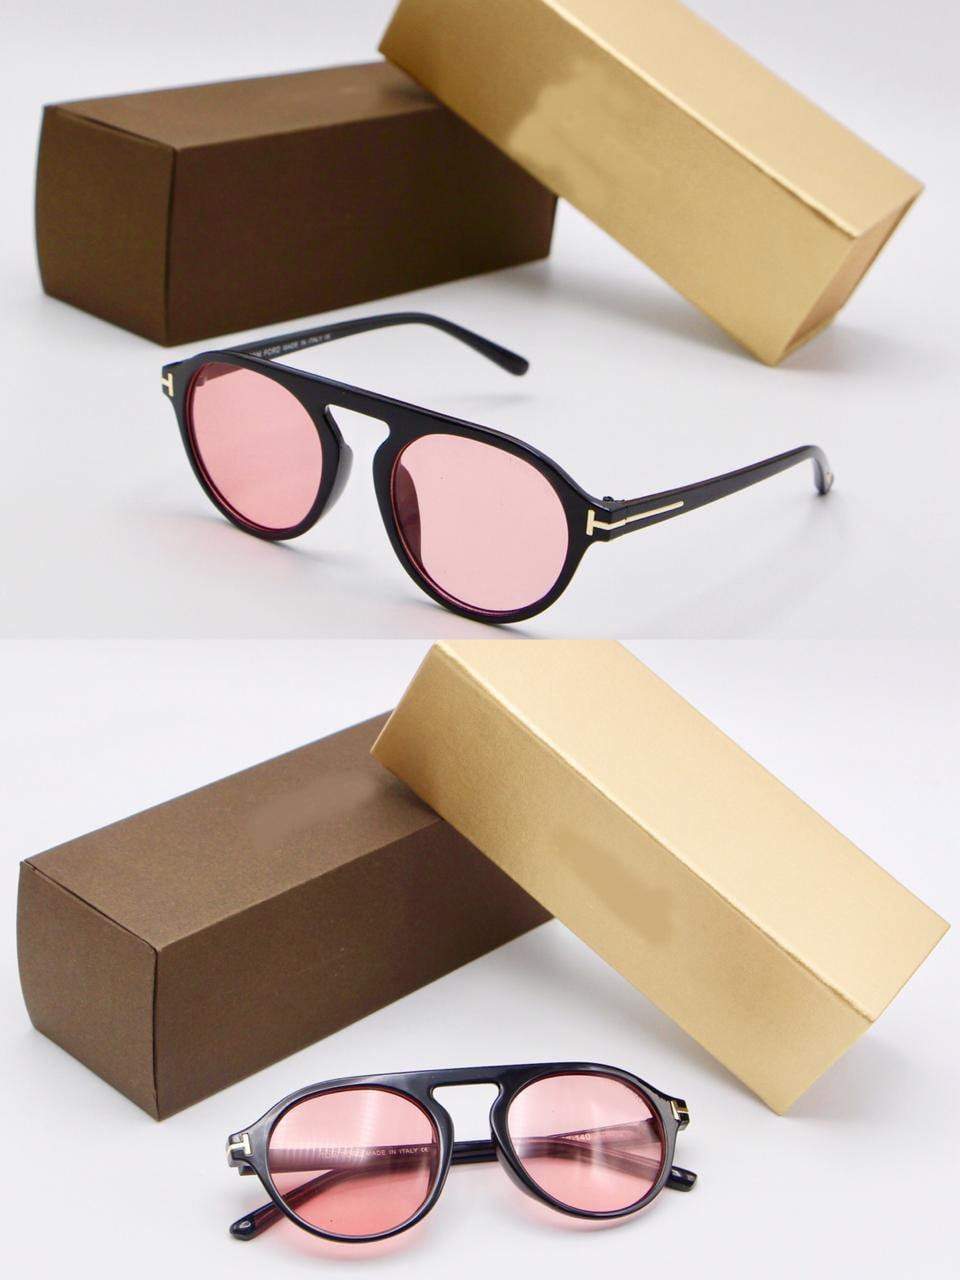 Multicolor Wayfarer Sunglasses For Men And Women-Unique and Classy Premium Unique and Classy